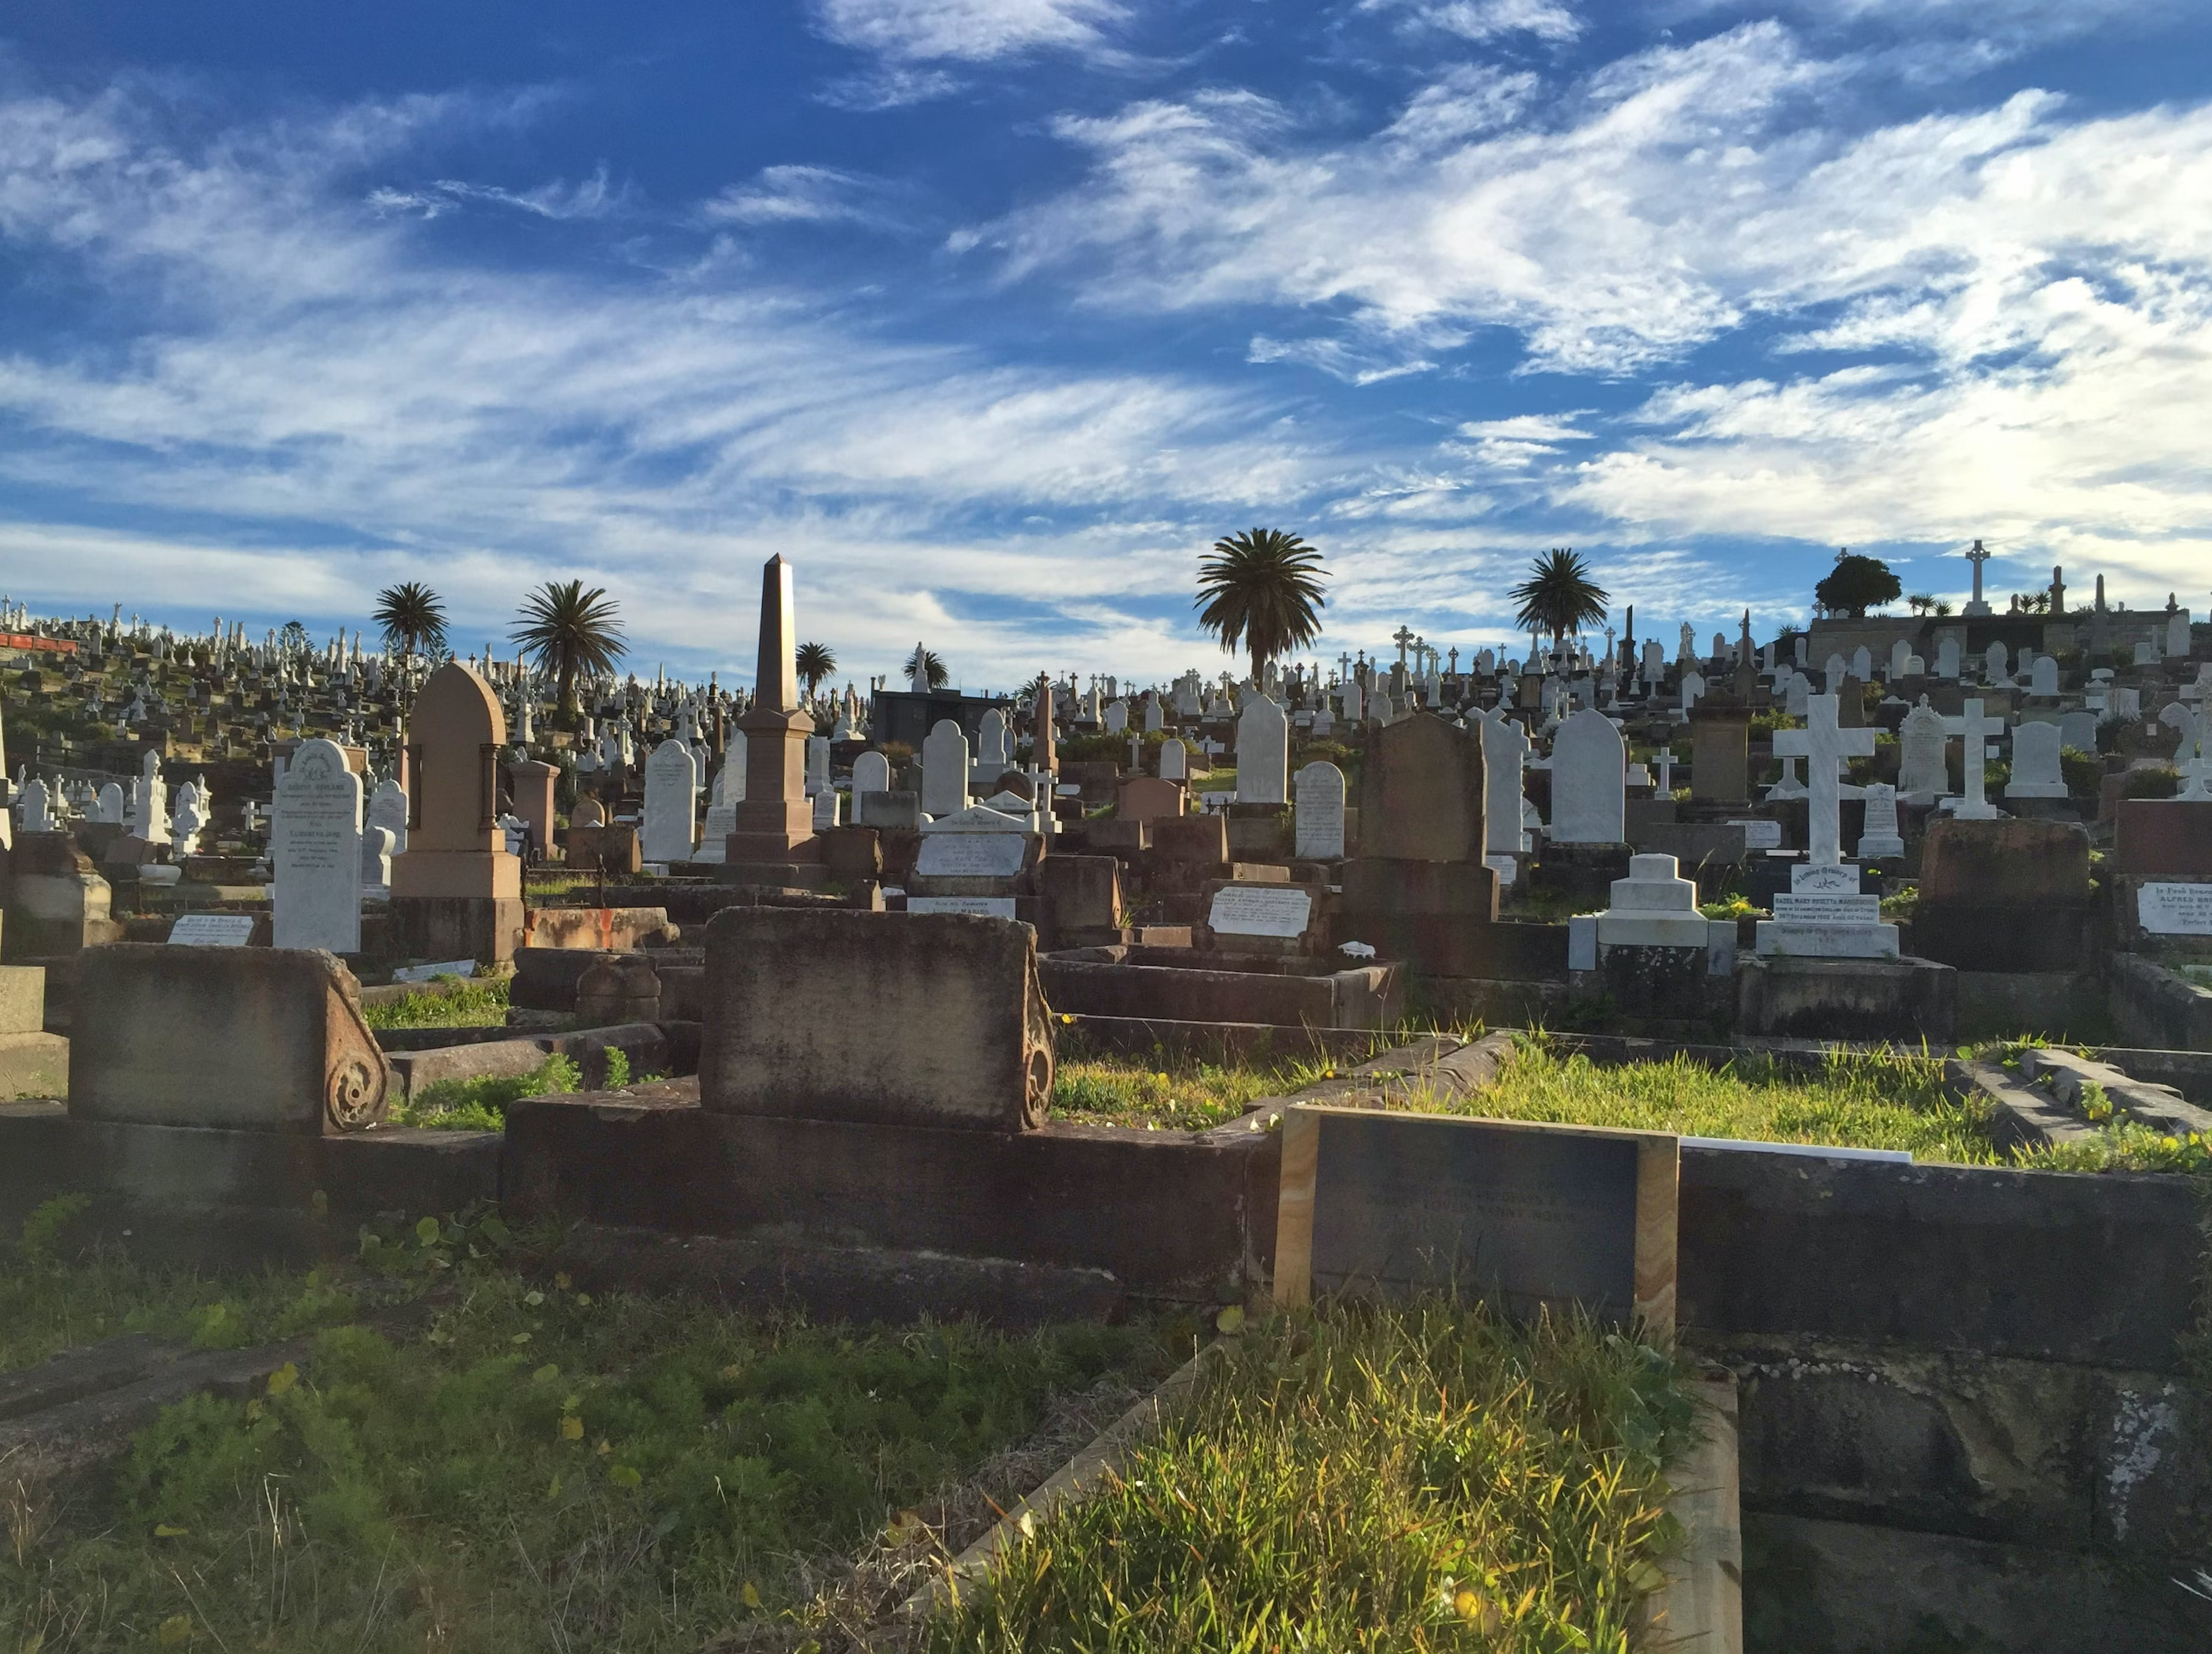 waverley cemetery cemetery tours